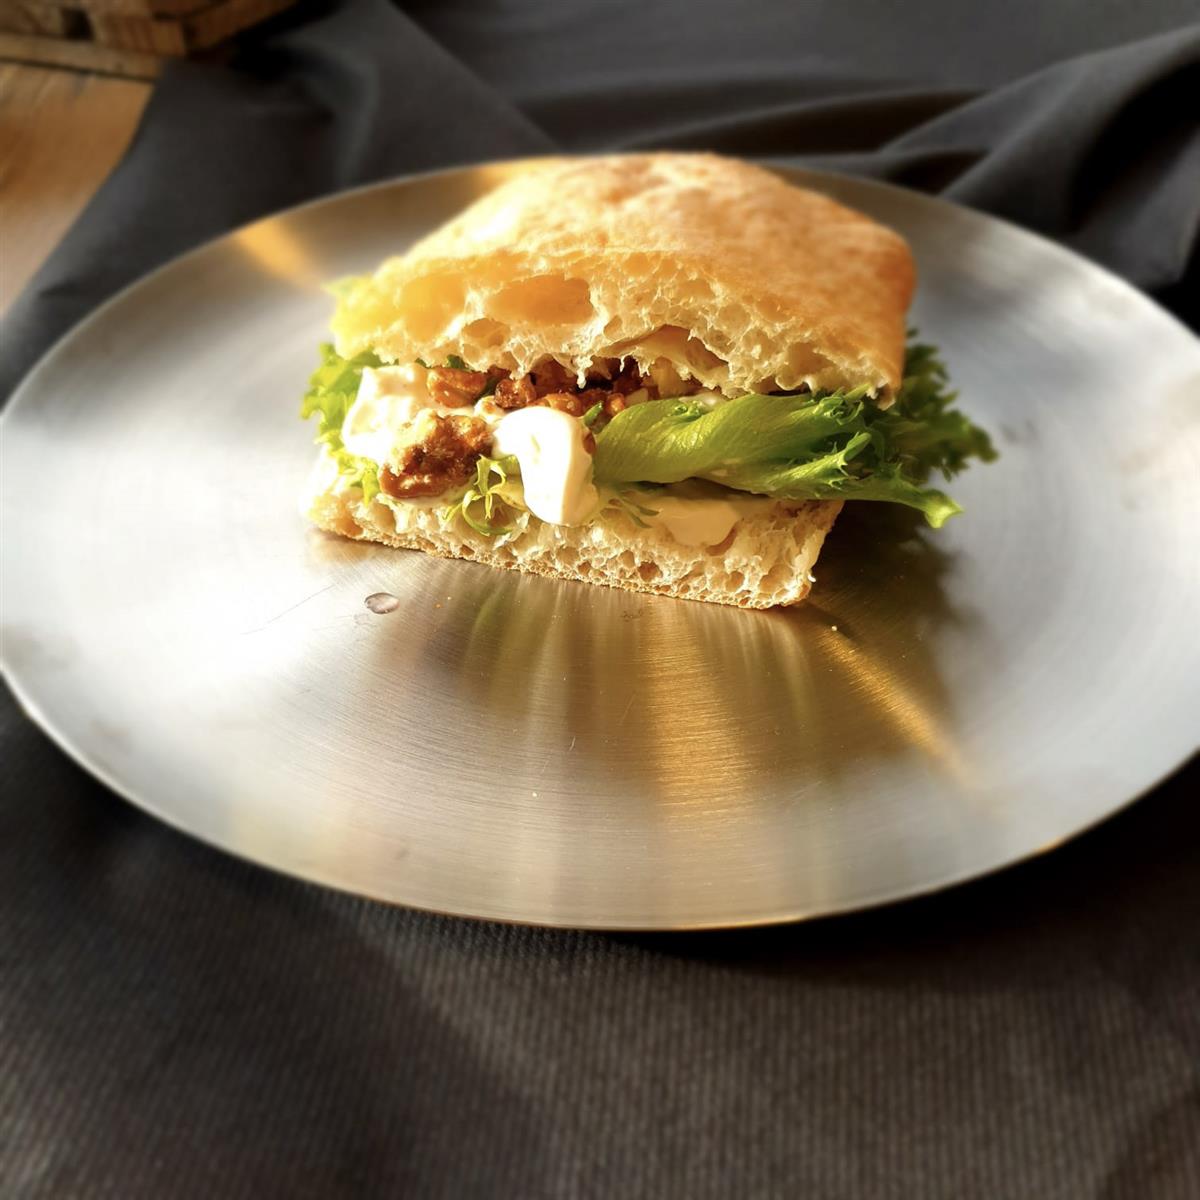 Ukens tips: Scrocchiarella sandwich